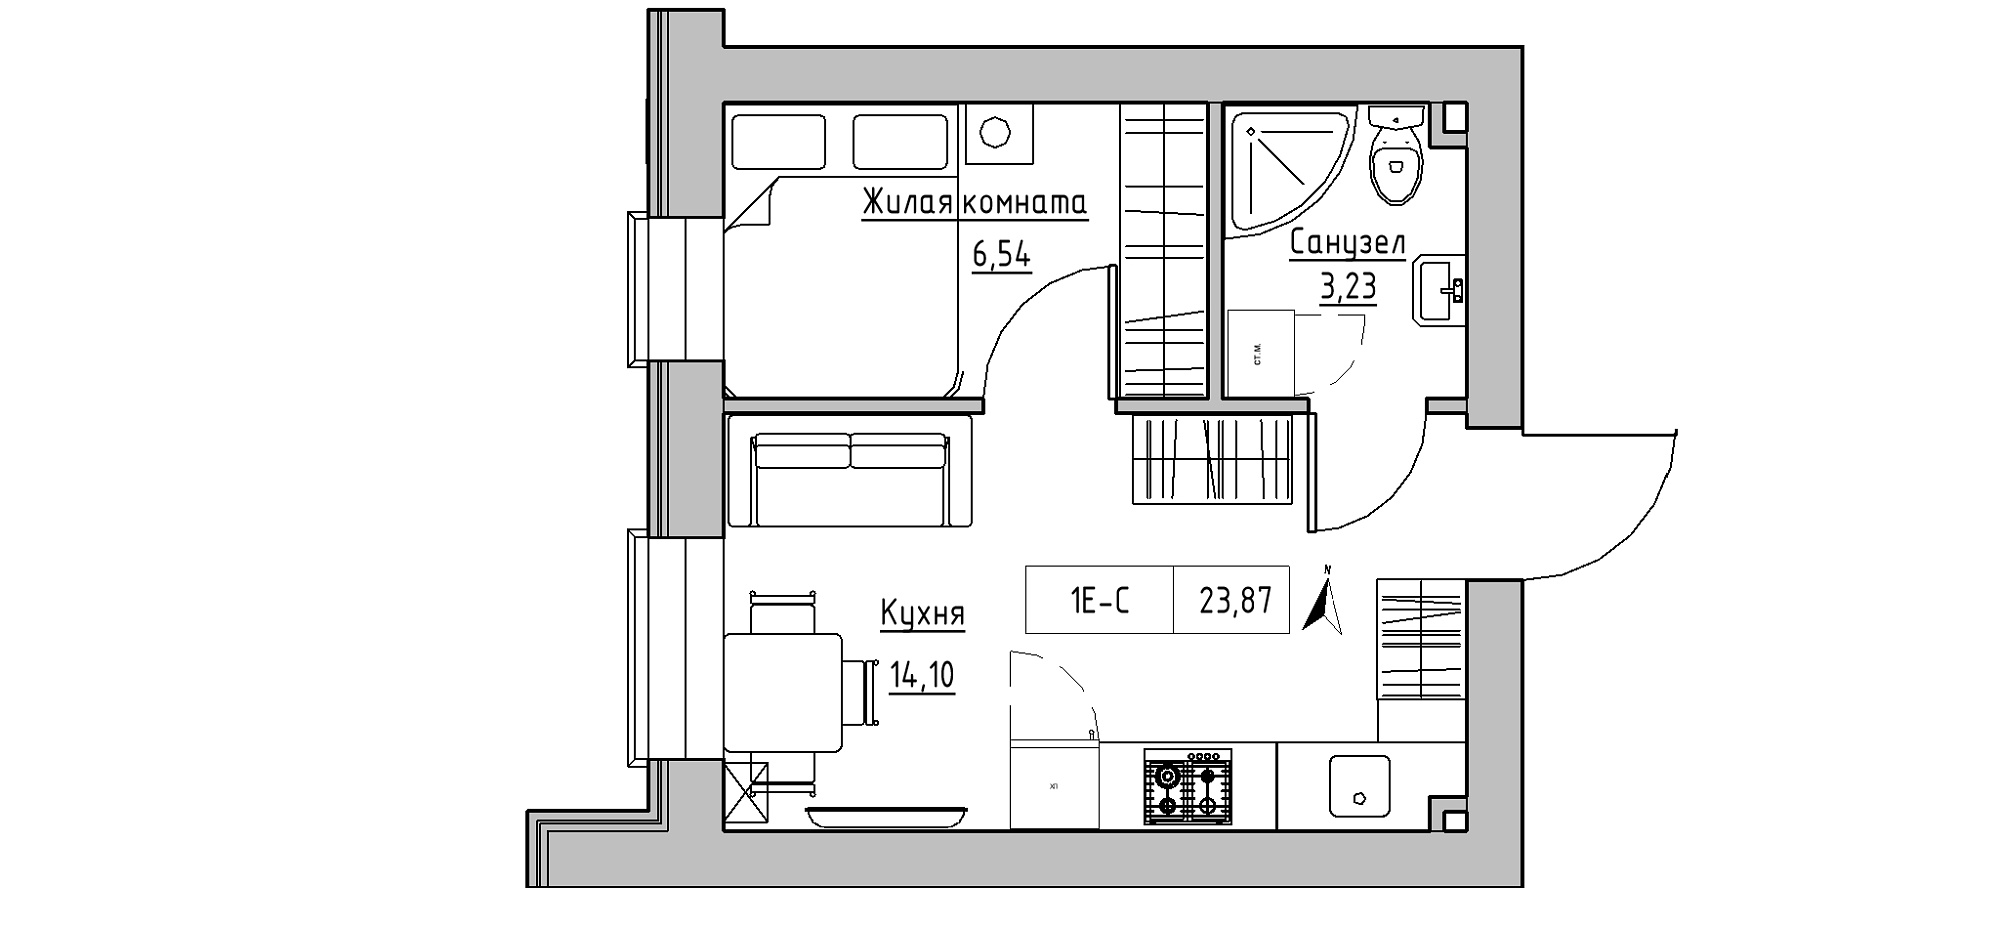 Planning 1-rm flats area 23.87m2, KS-020-04/0012.